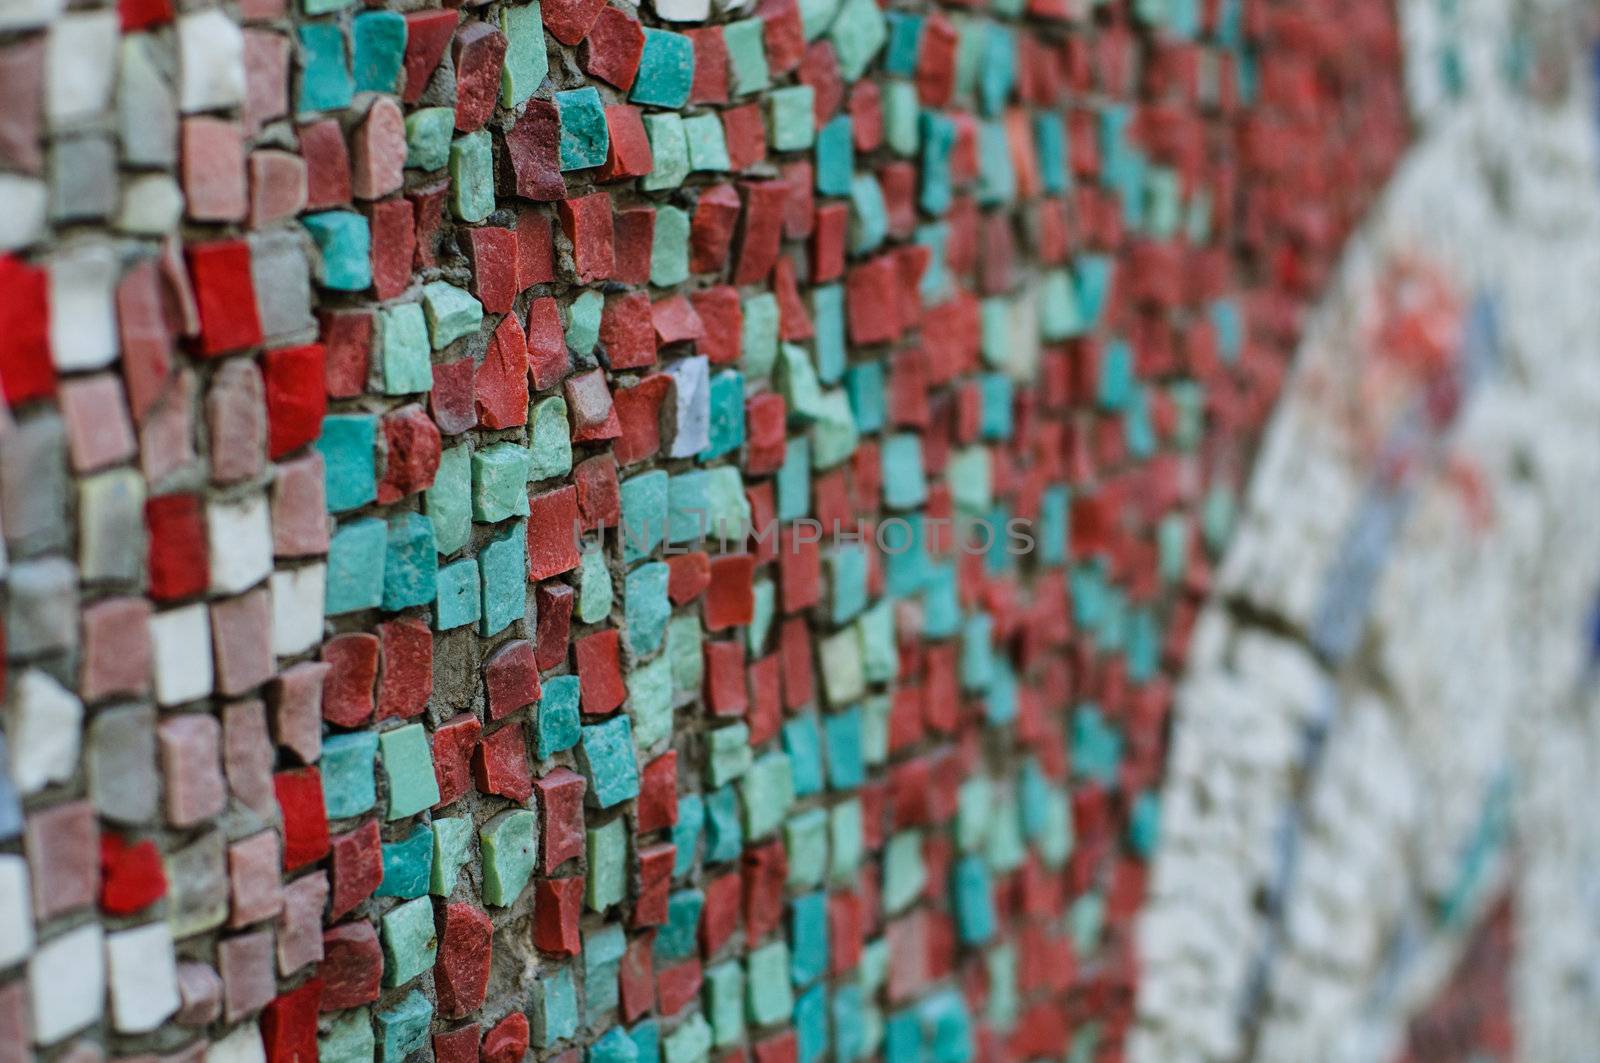 Mosaic Wall Texture by nvelichko